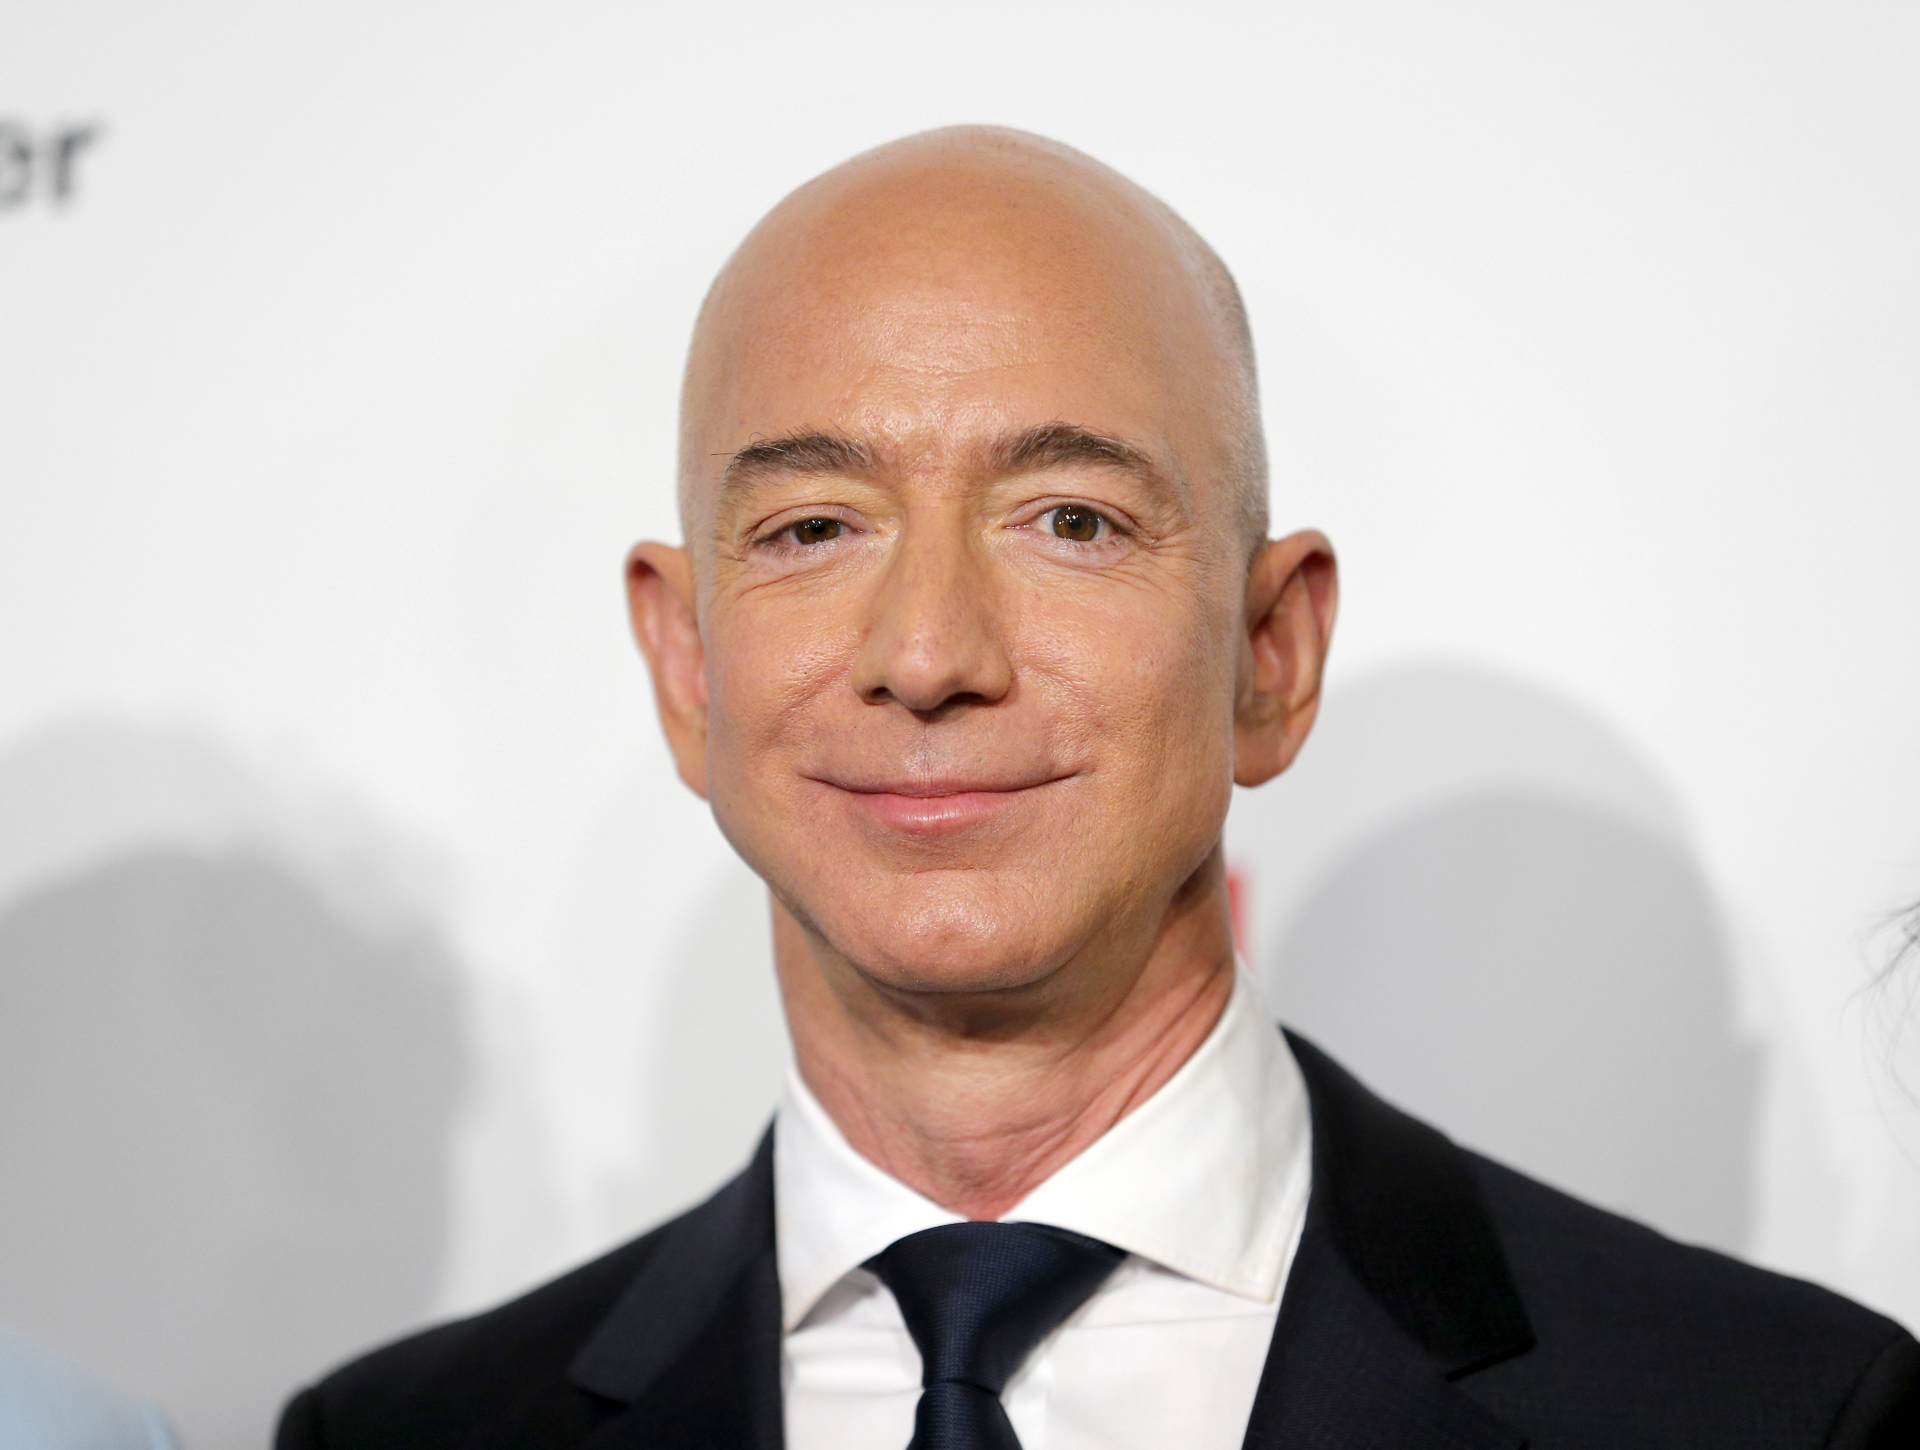 $200 Milyar Servete Ulaşan İlk İnsan: Jeff Bezos